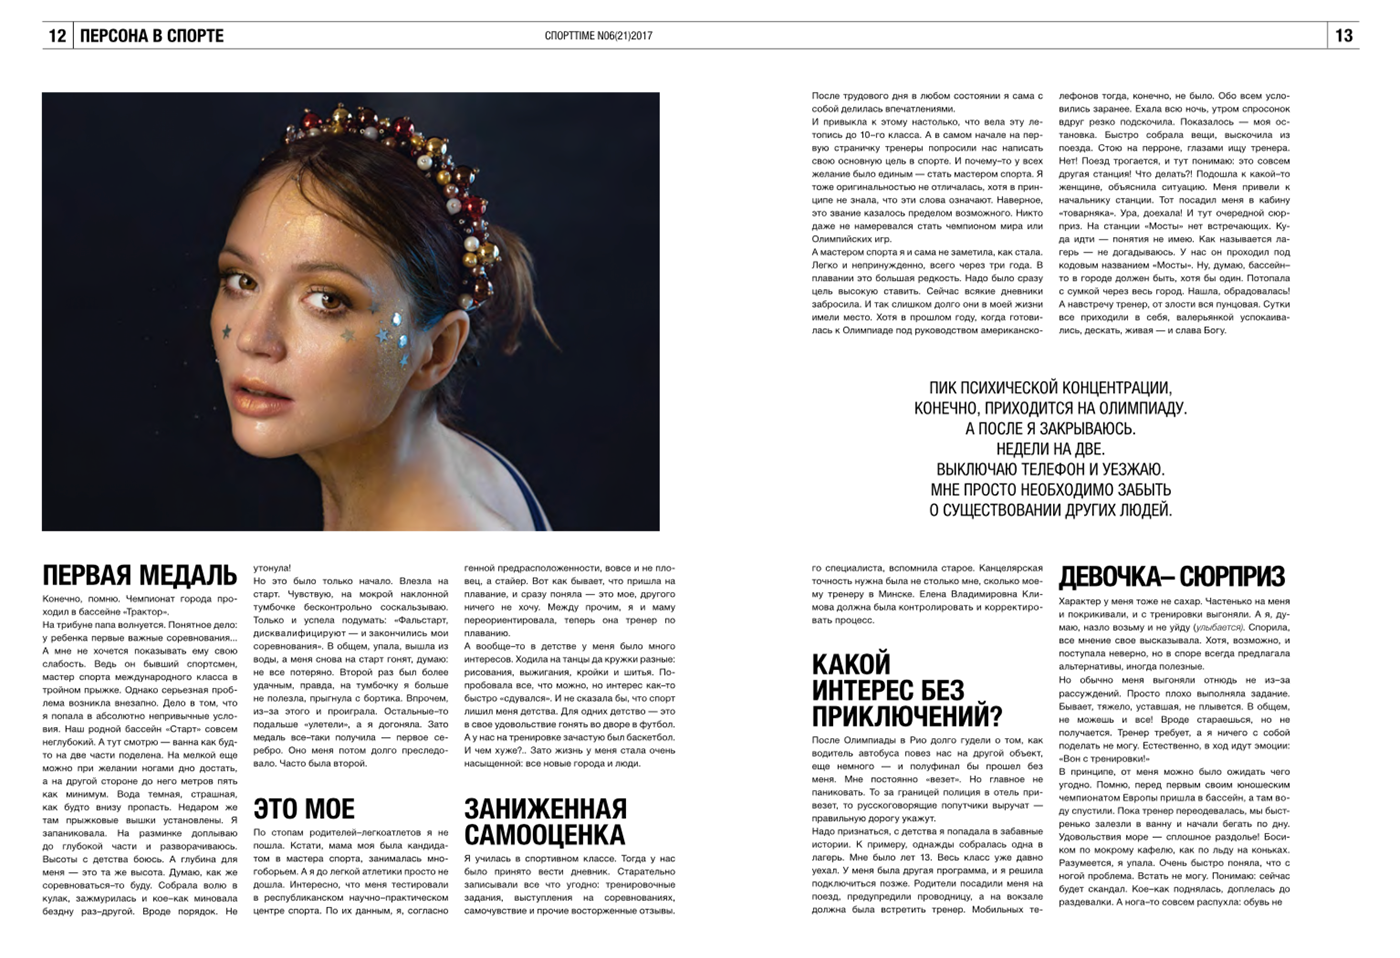 gerasimenya shelegov Sporttime Fashion  sport swimmer editorial cover backstage studio